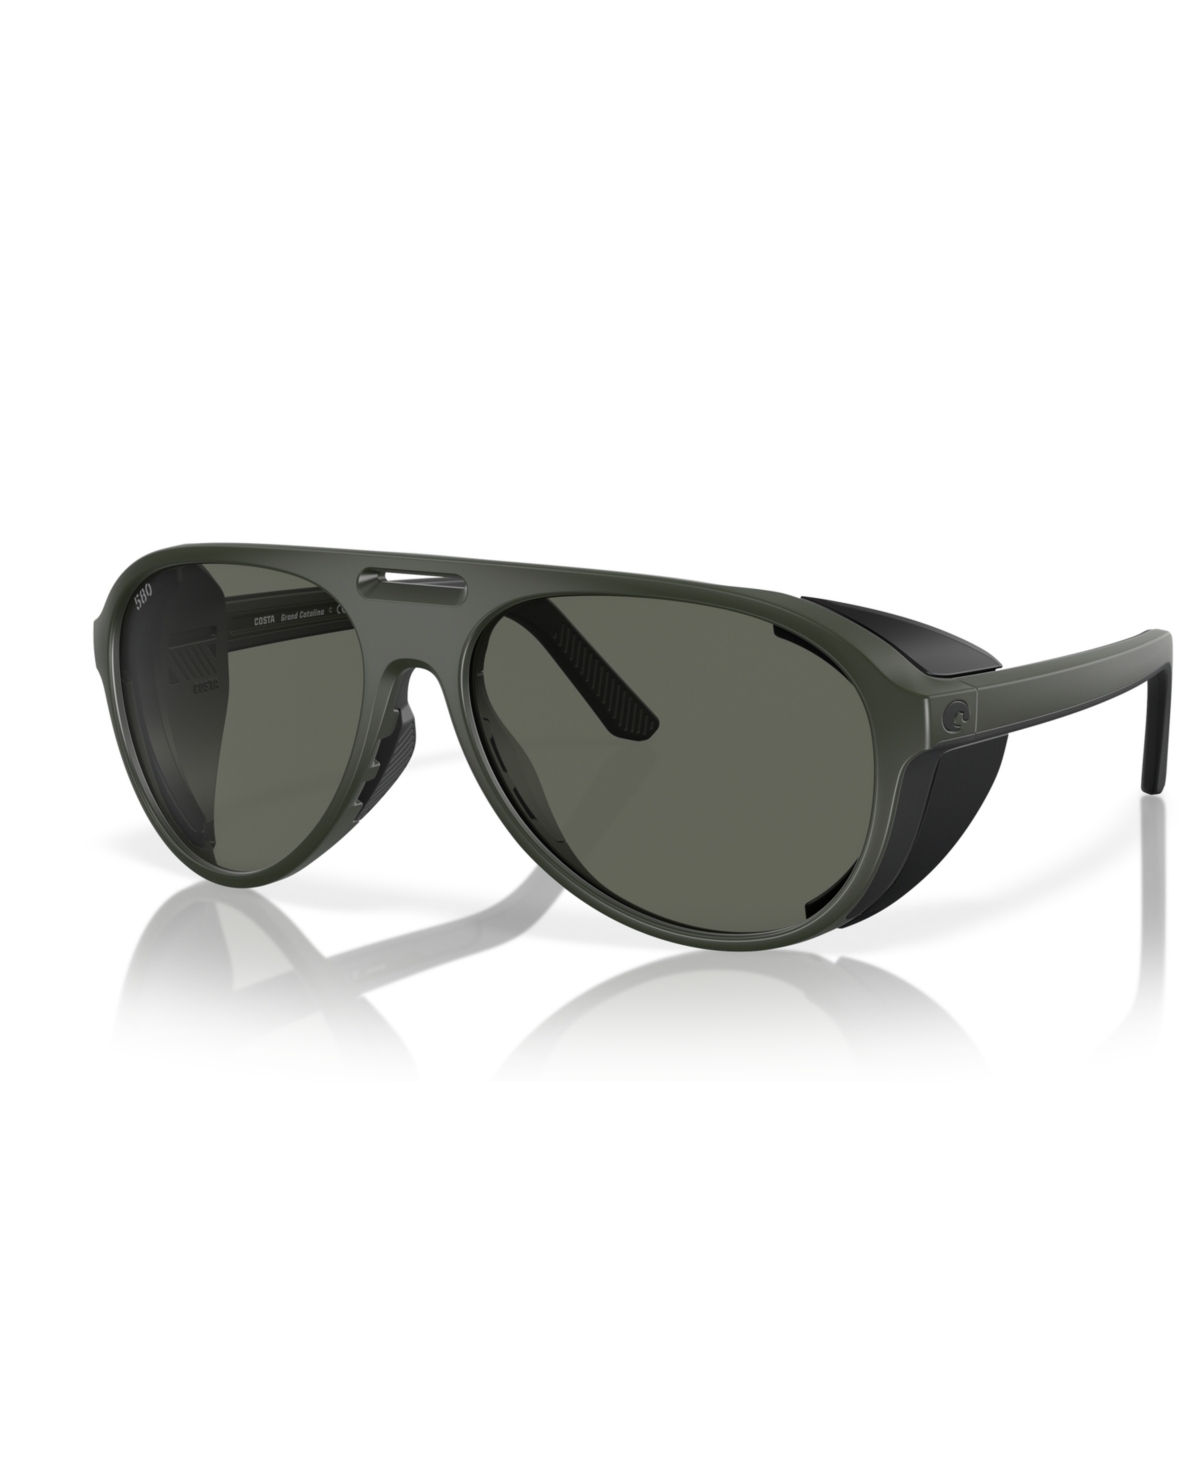 Men's Polarized Sunglasses, Grand Catalina 6S9117 - Matte Olive